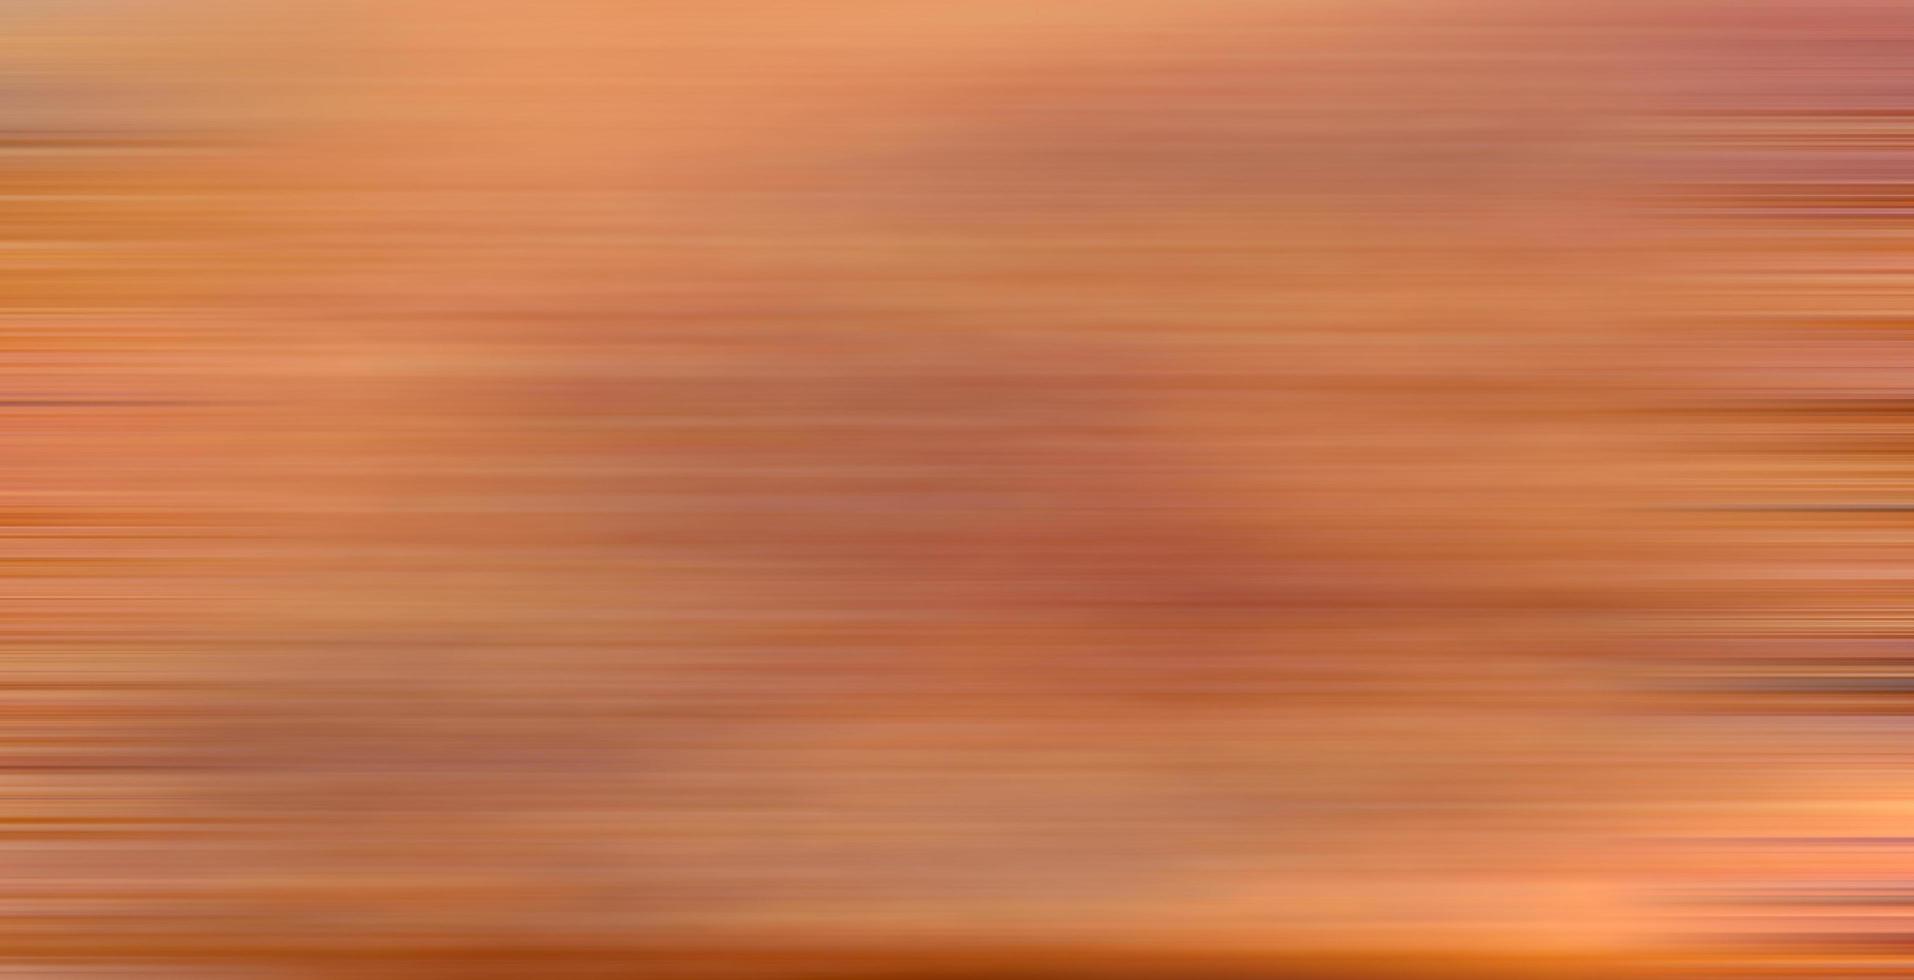 Abstract orange motion blur background photo